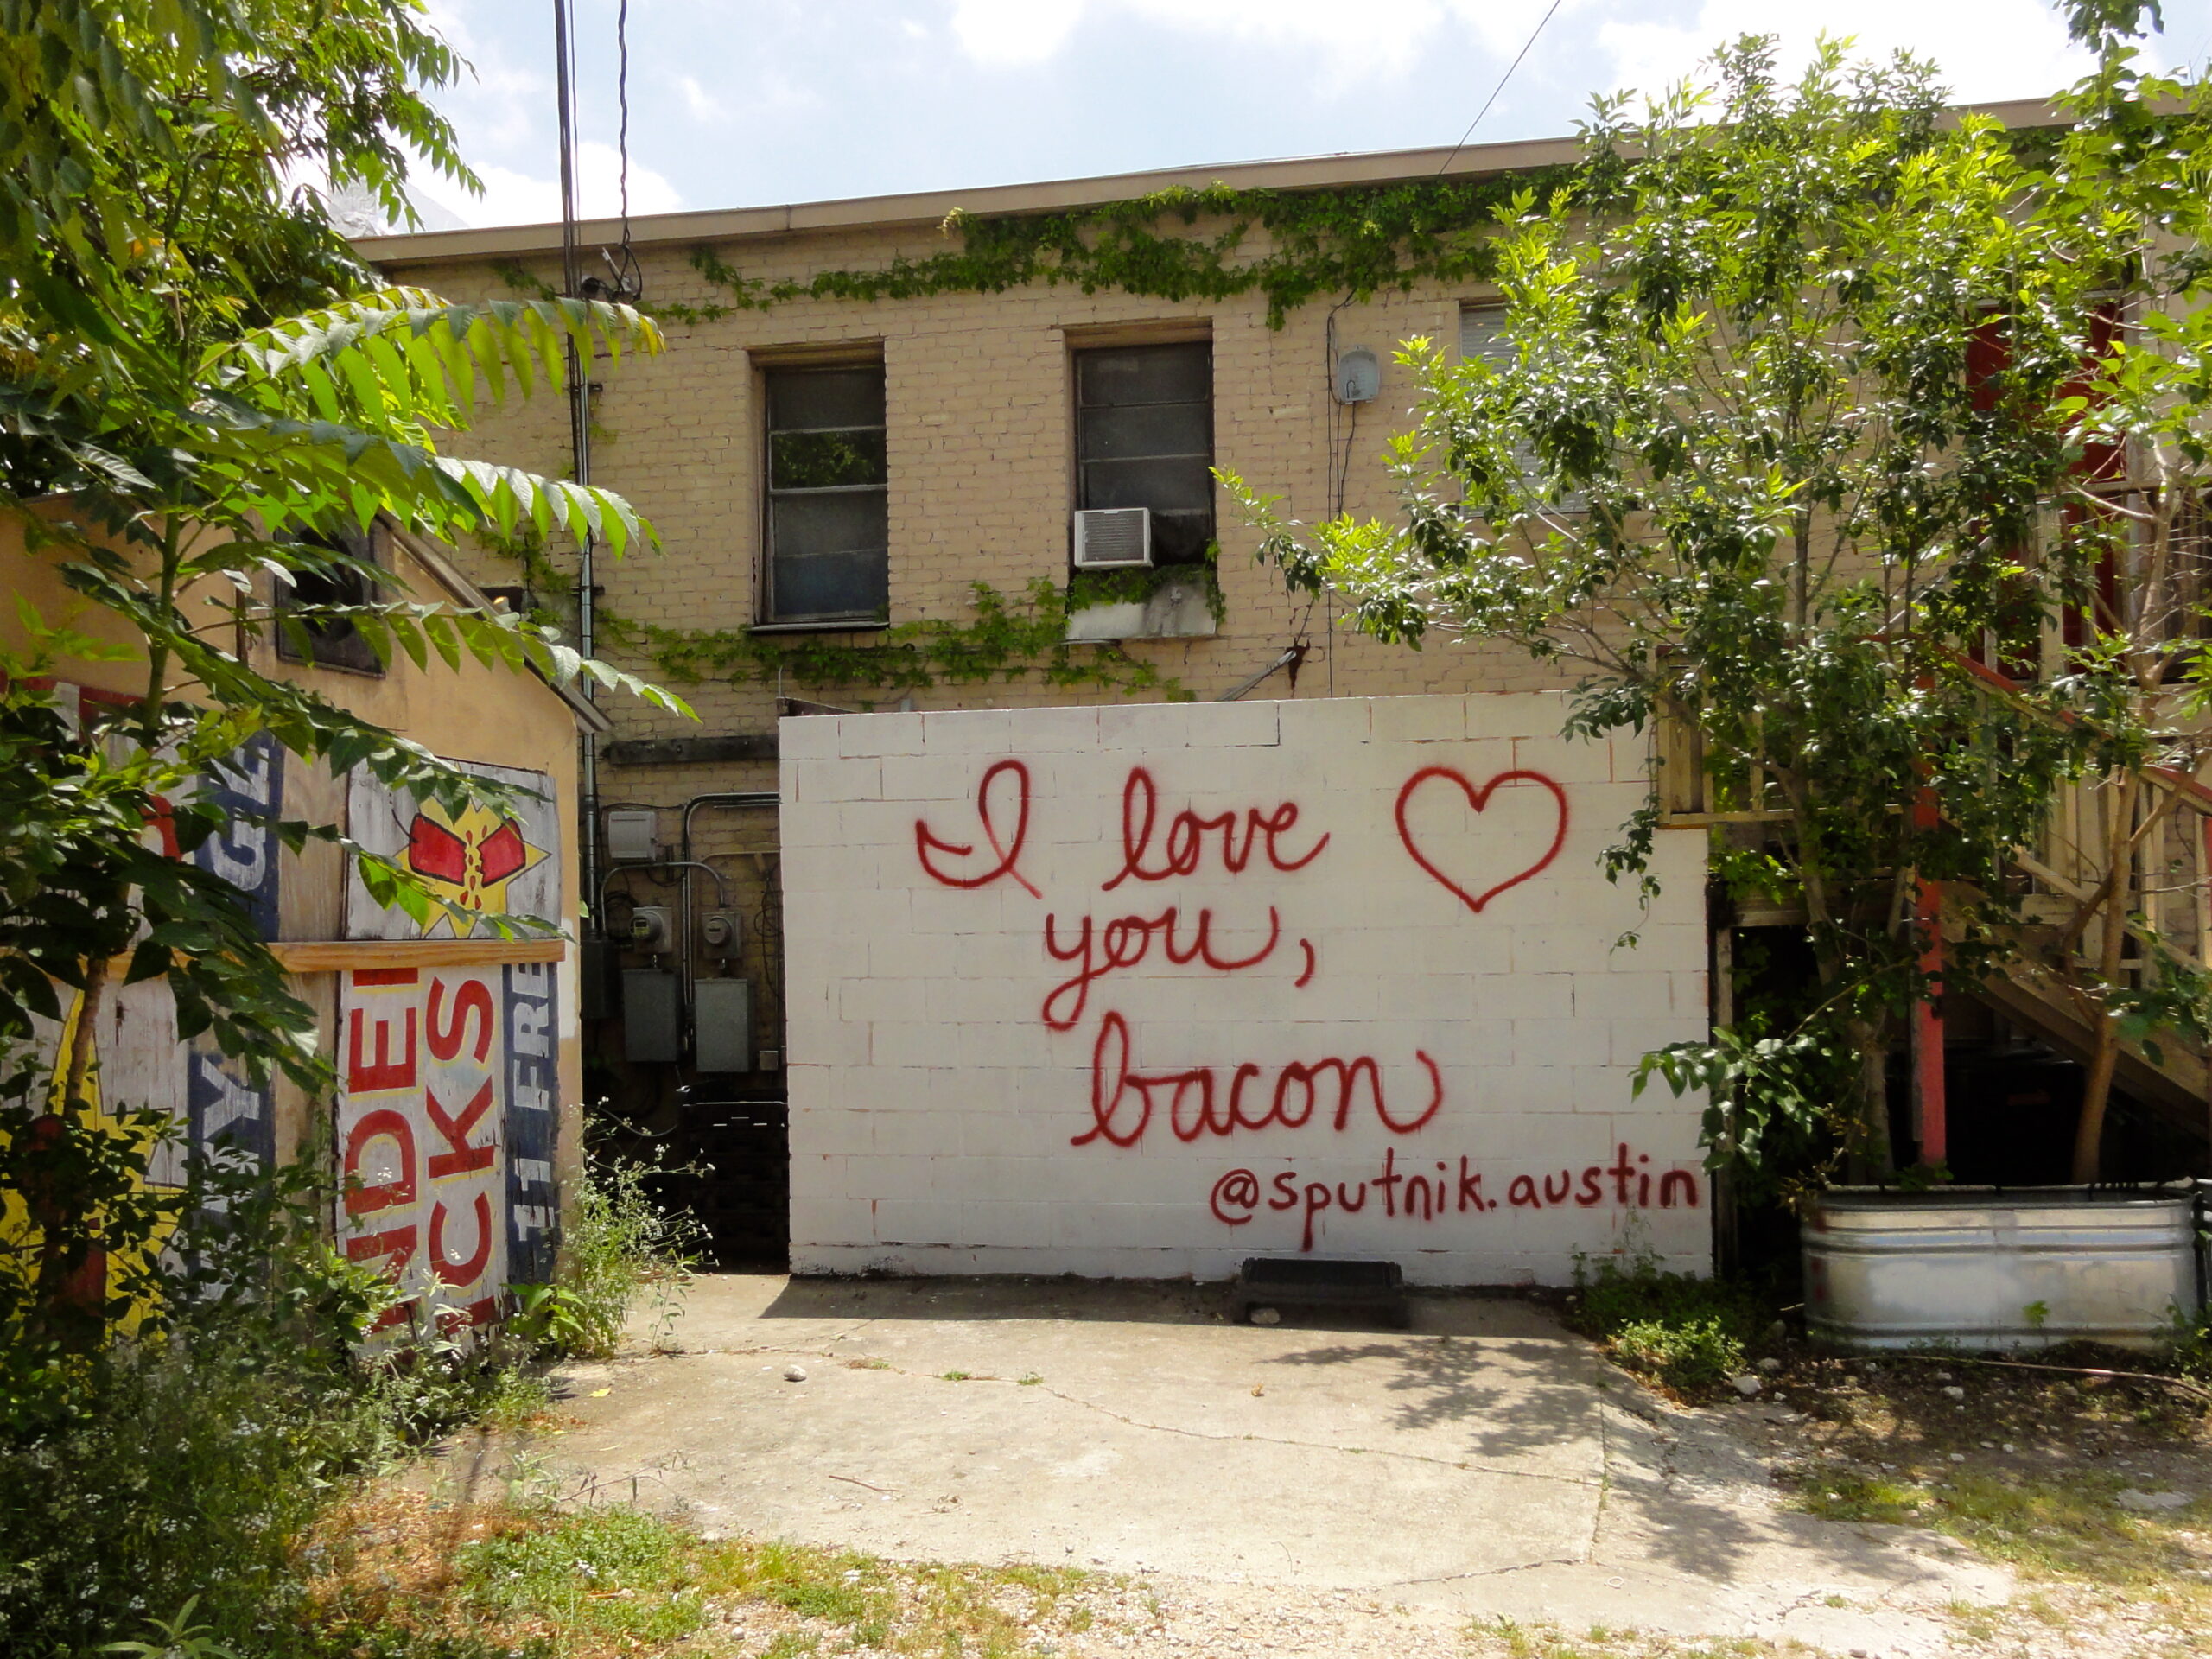 I Love You, Bacon Mural